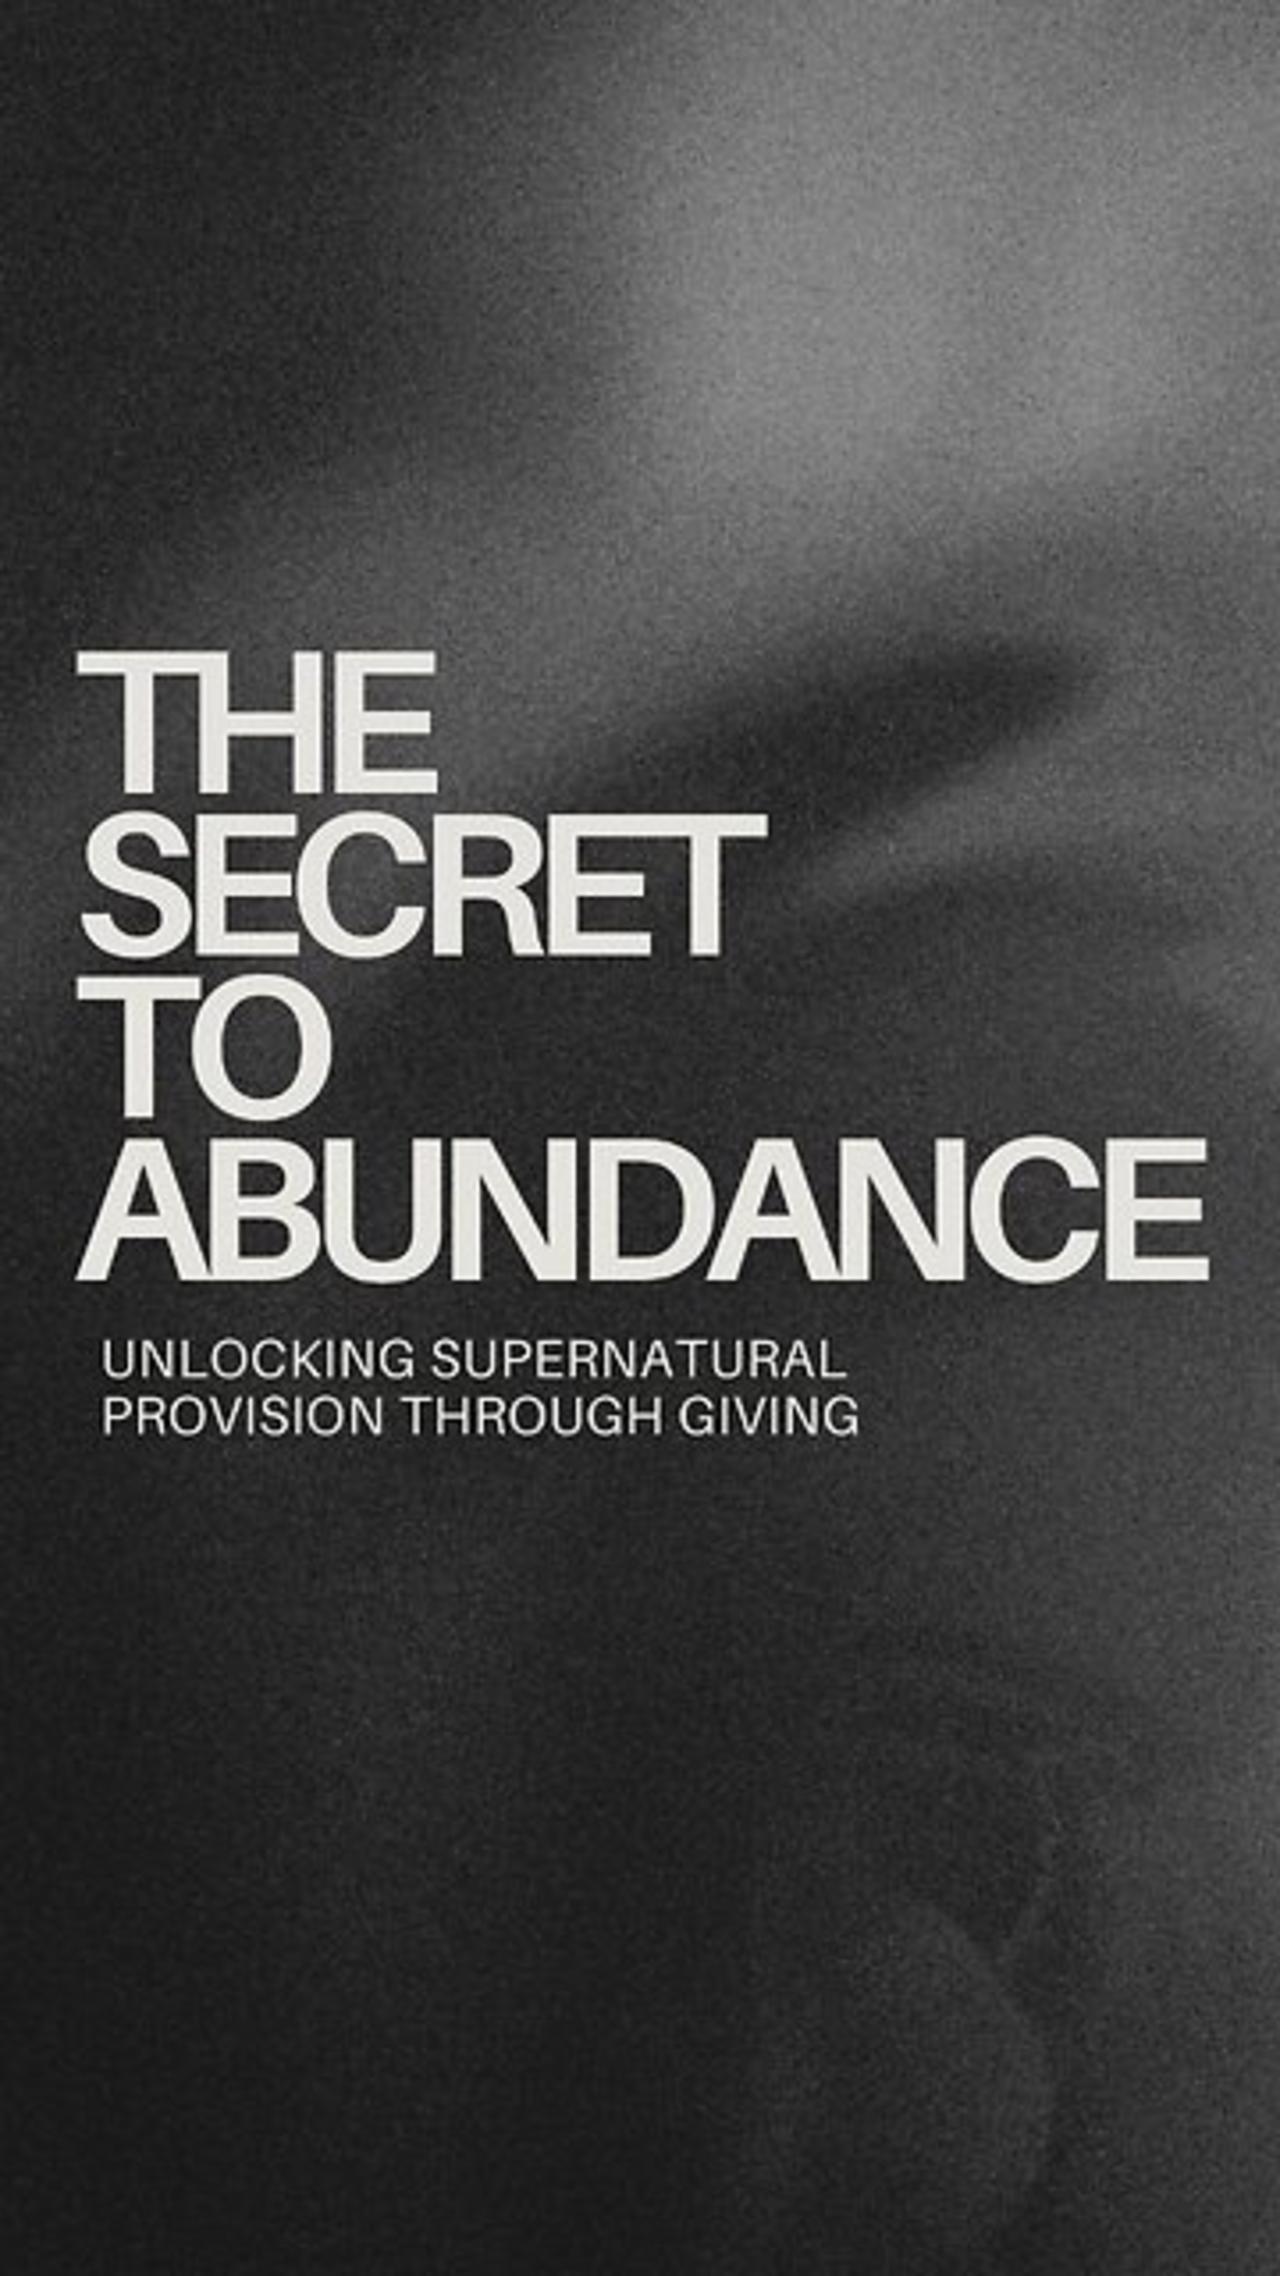 The Secret to Abundance: Unlocking Supernatural Provision Through Giving